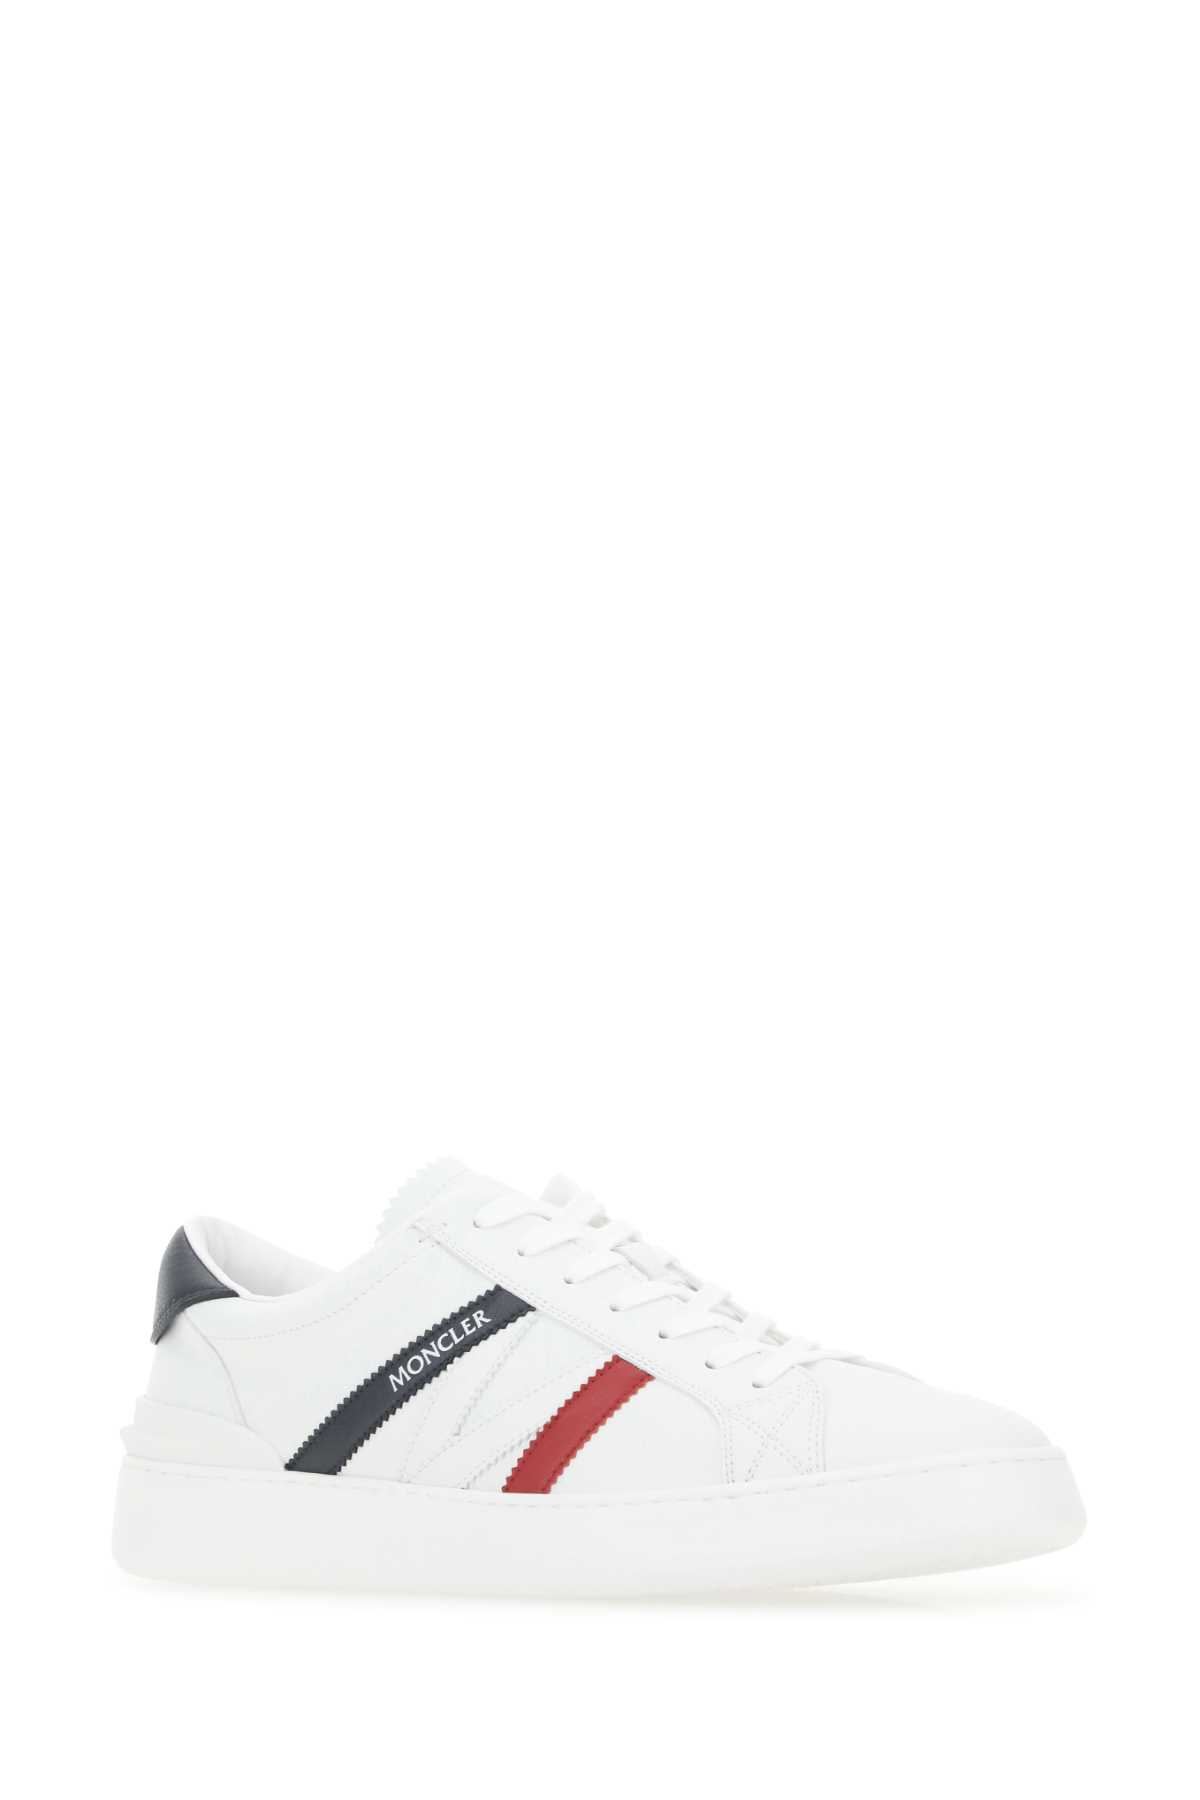 Shop Moncler White Leather Monaco M Sneakers